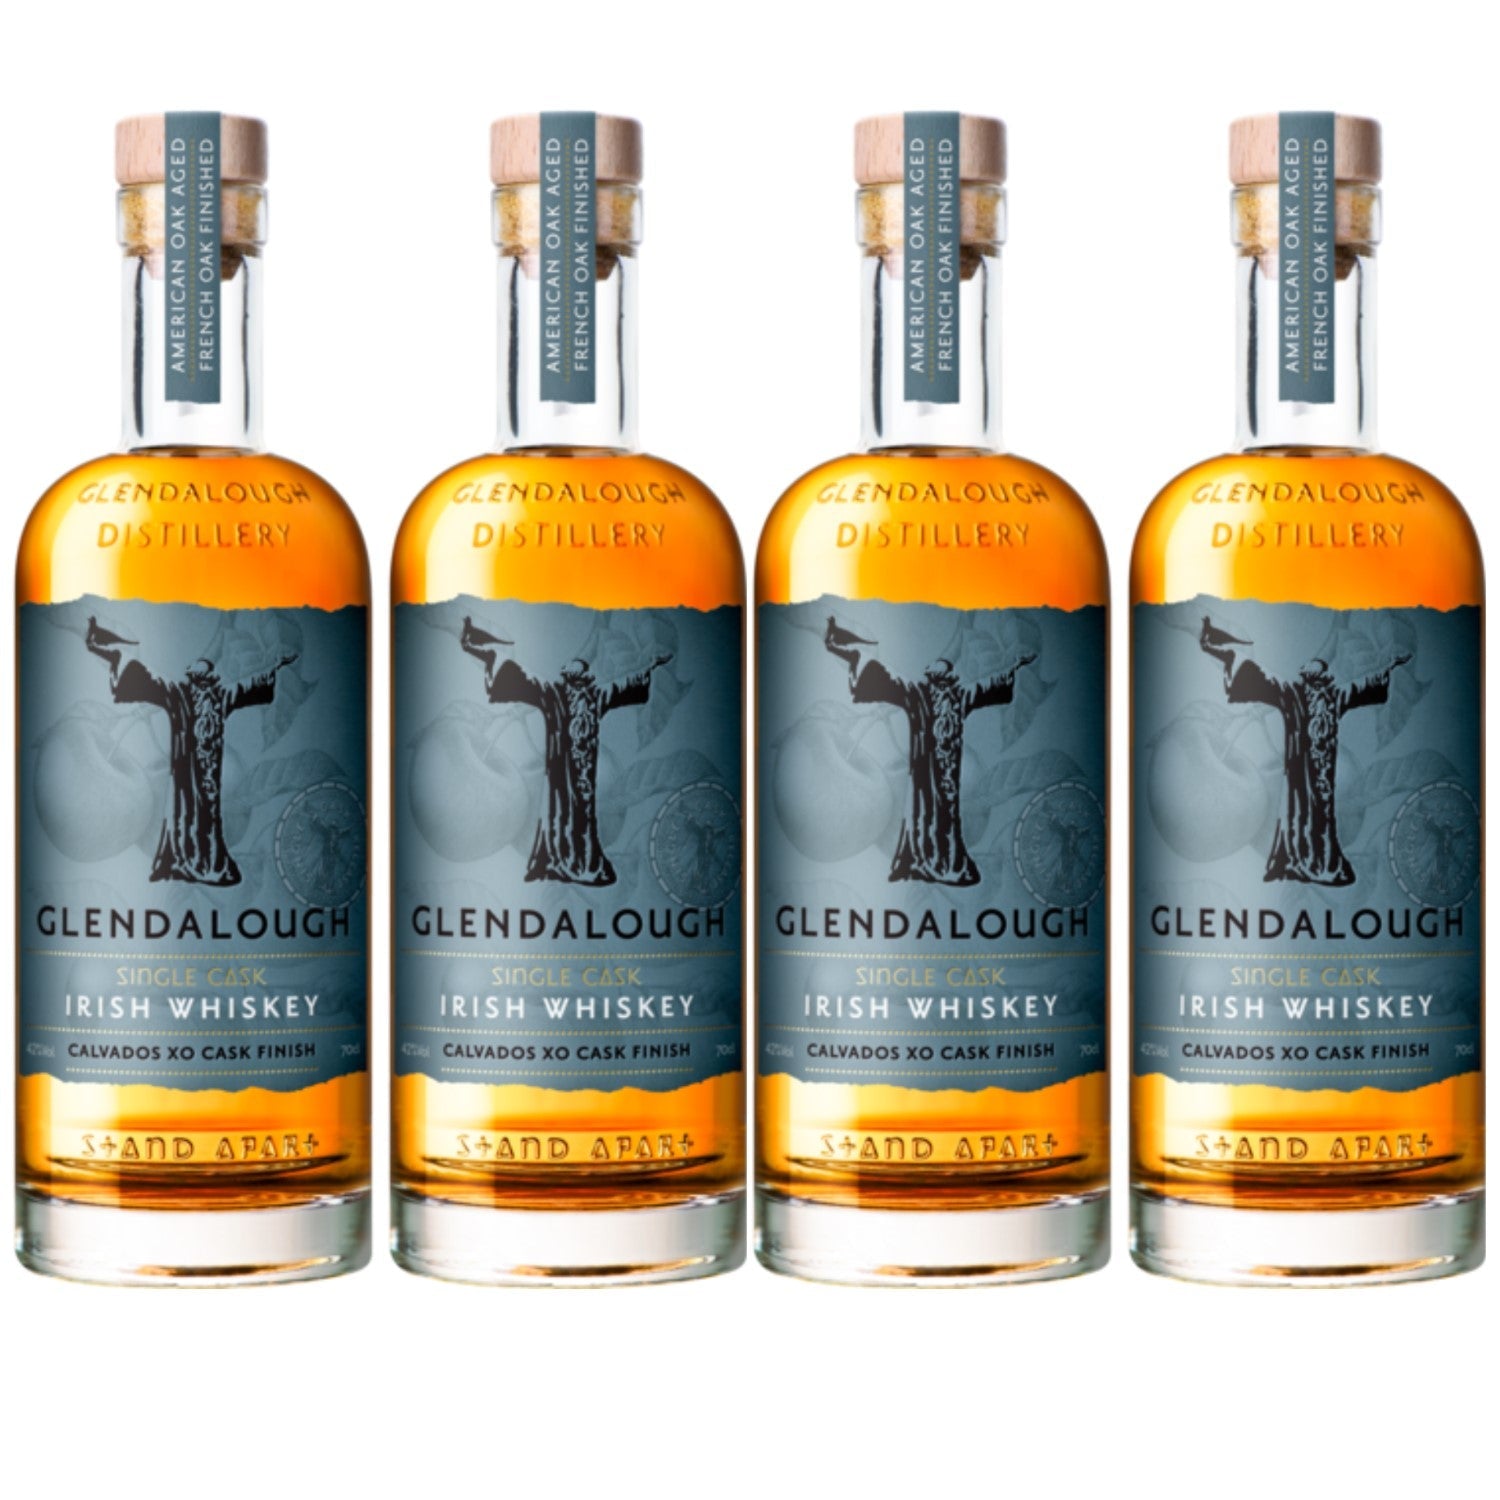 Glendalough Calvados XO Single Cask Finish Irish Whiskey Irland (4 x 0.7l) - Versanel -